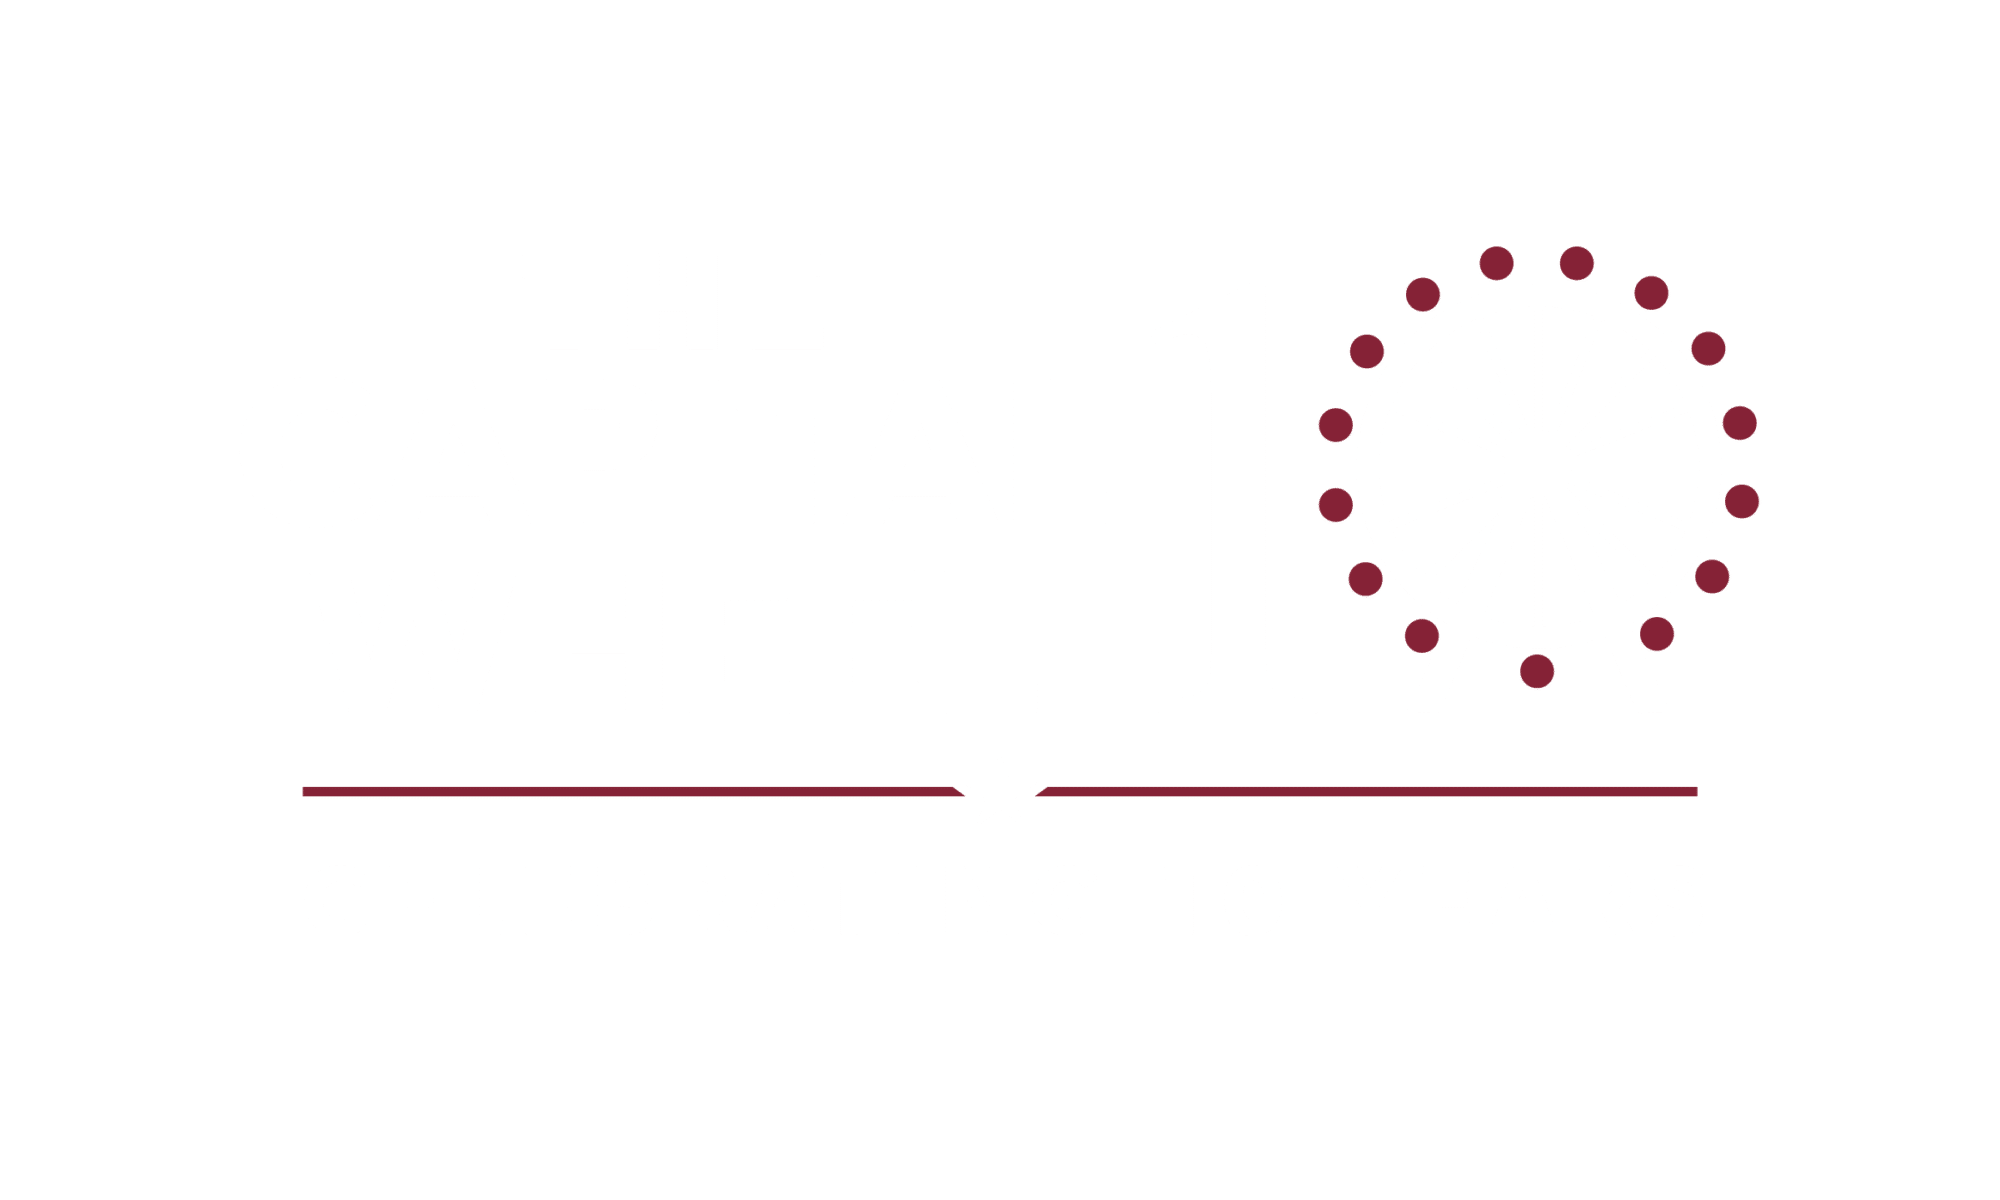 The Capital Wheel at National Harbor